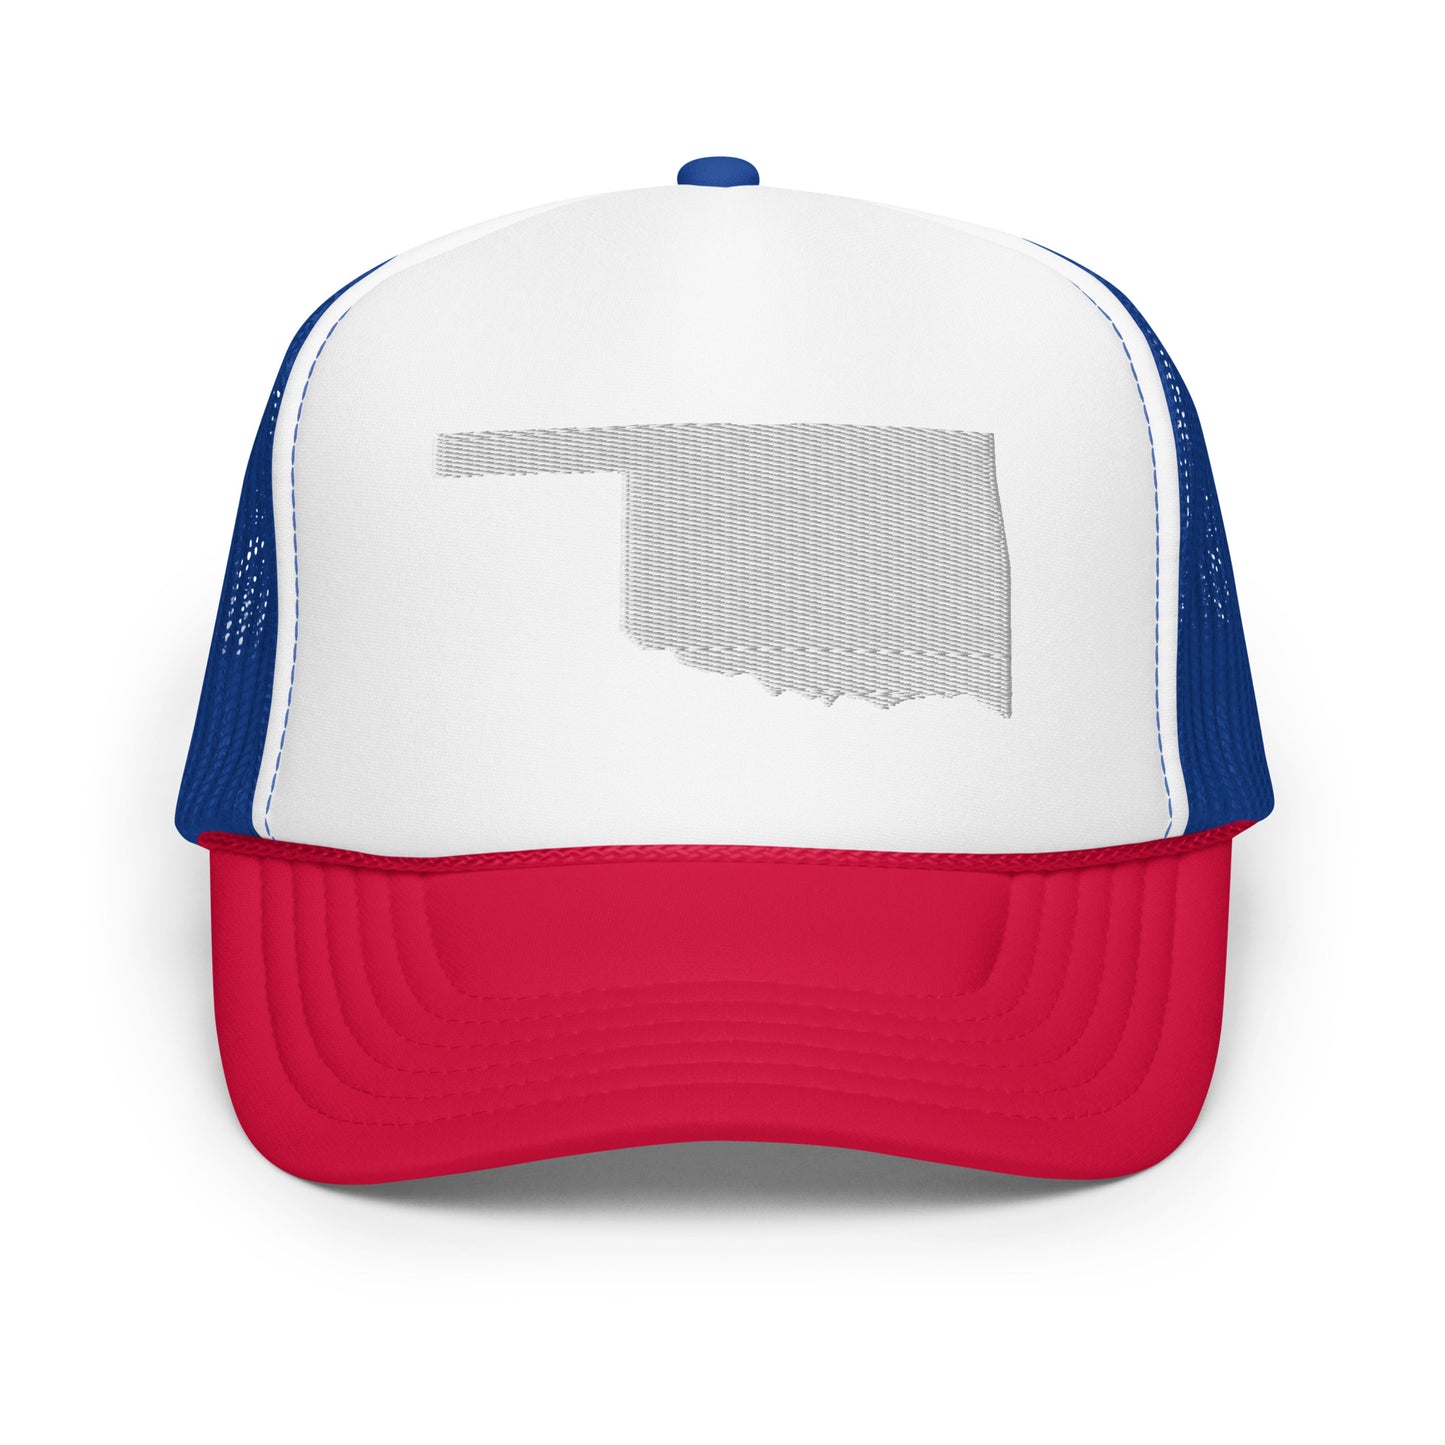 Oklahoma State Silhouette Foam 5 Panel A-Frame Snapback Trucker Hat